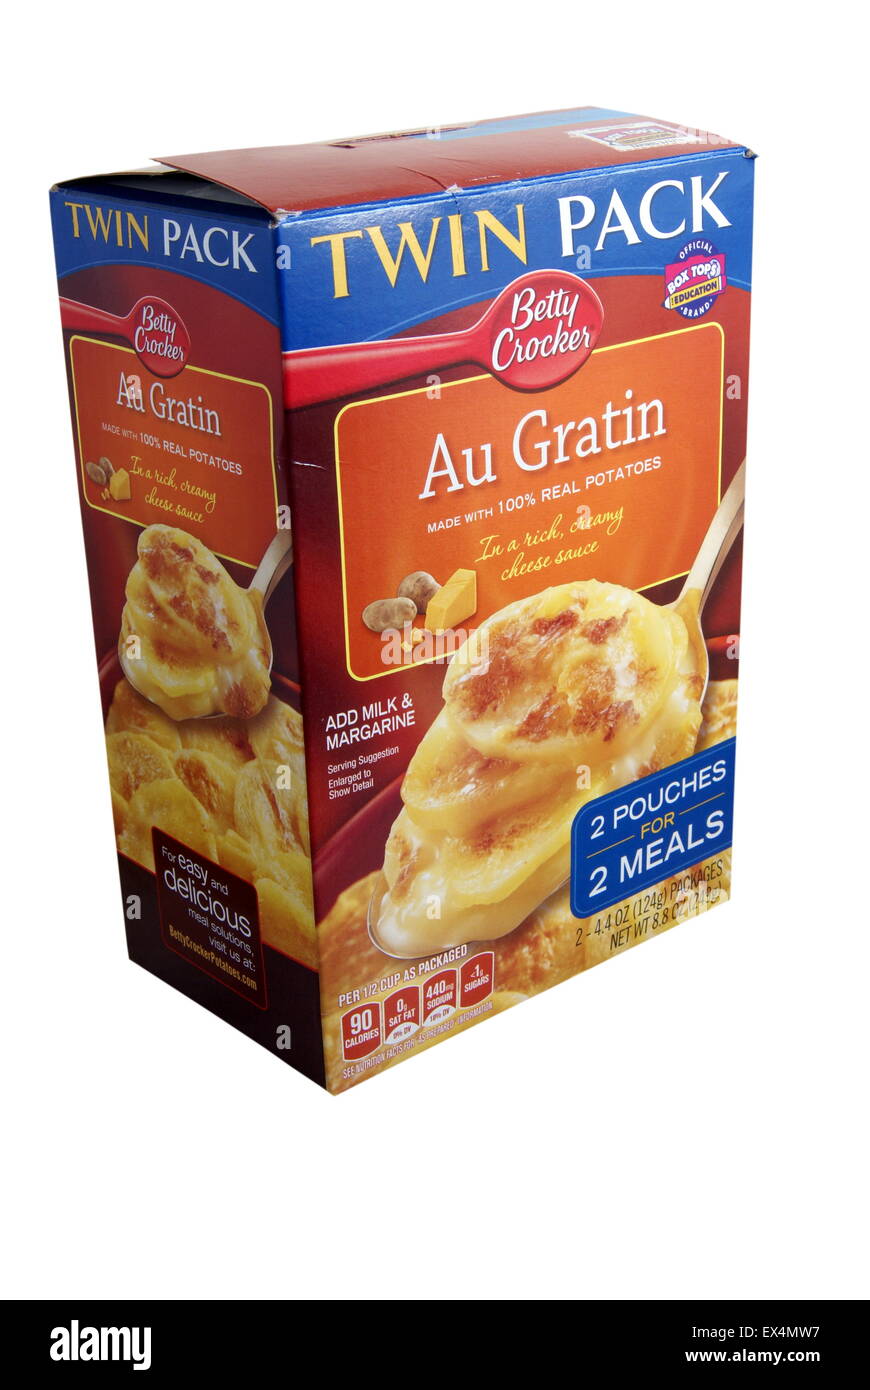 Twin Pack Box mit Betty Crocker Au Gratin Kartoffeln von General Mills Sales Inc., Minneapolis MN USA verteilt. Illustrative edito Stockfoto